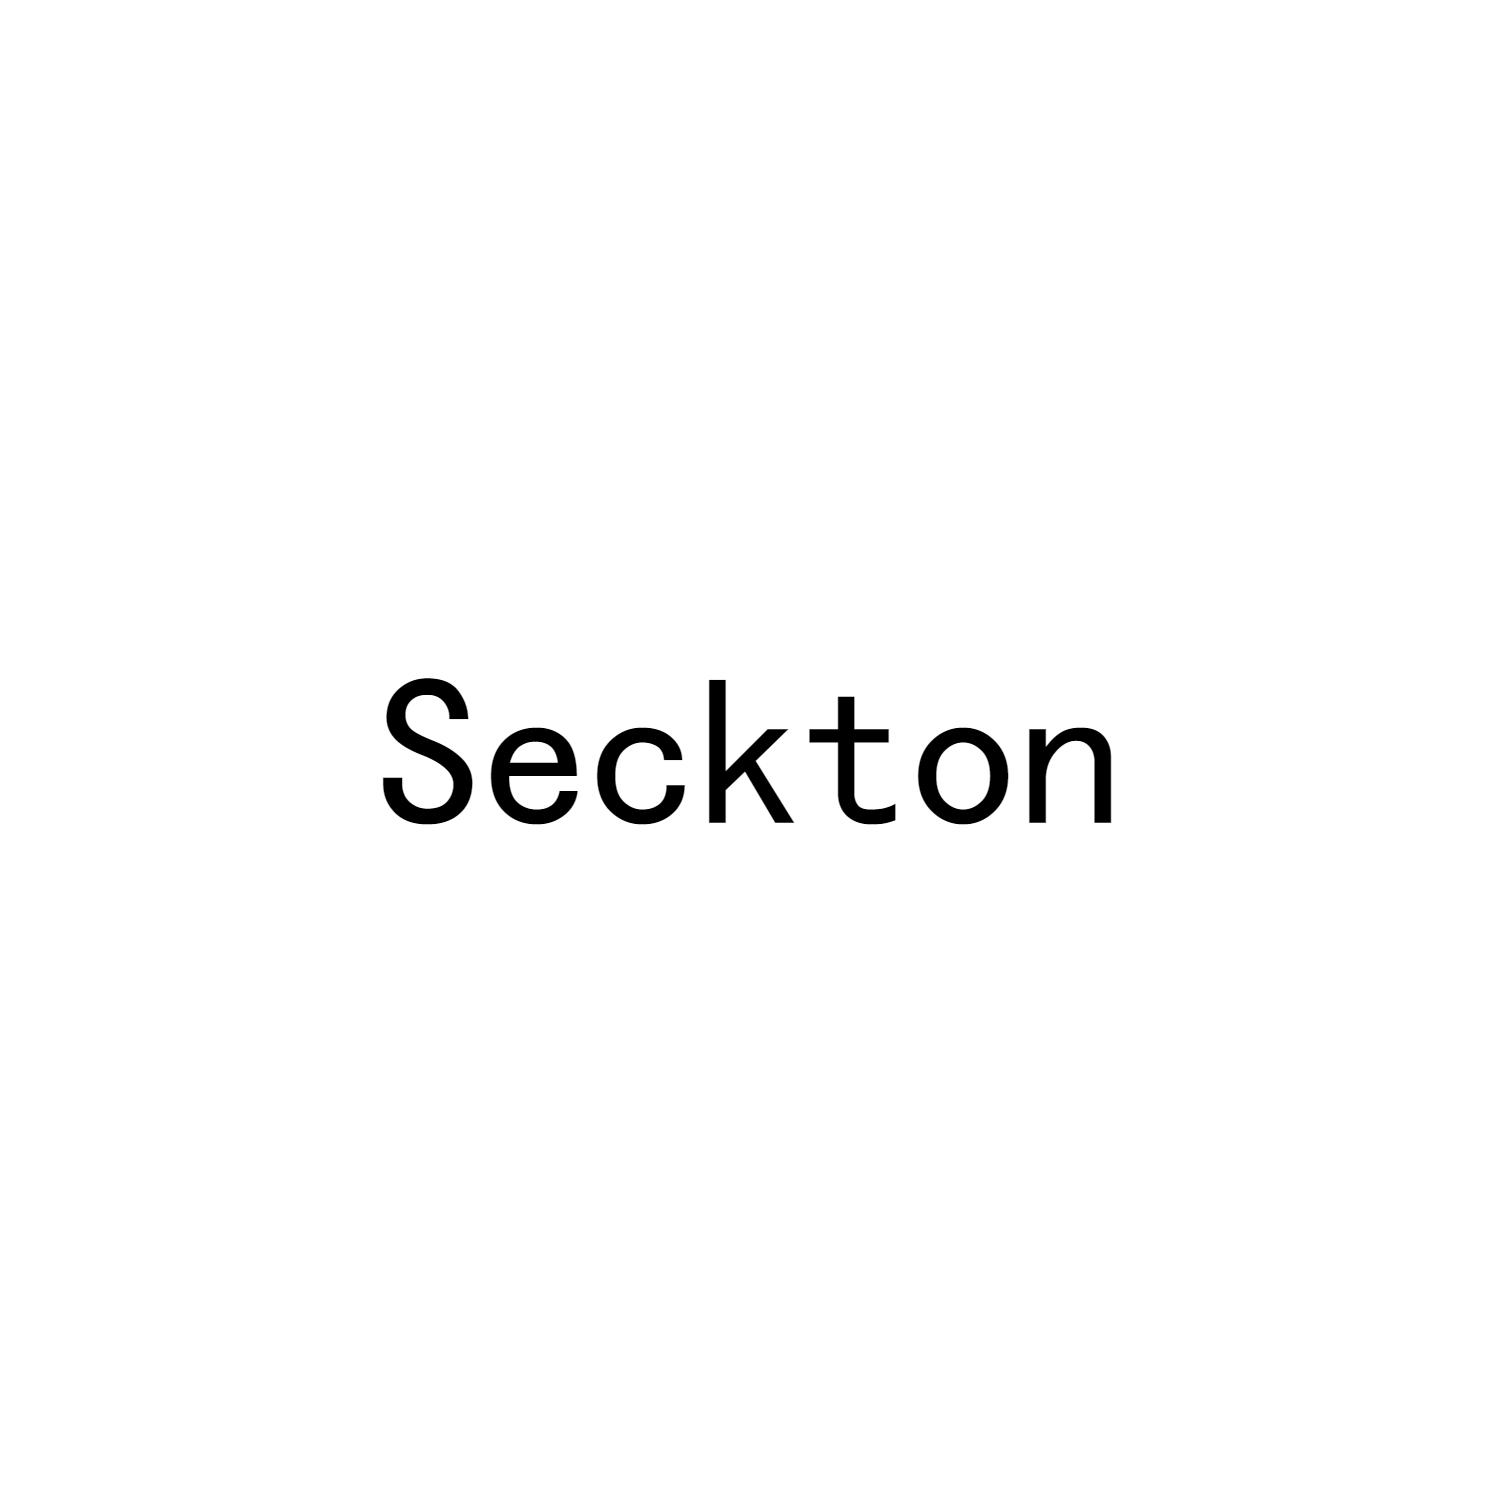 SECKTON